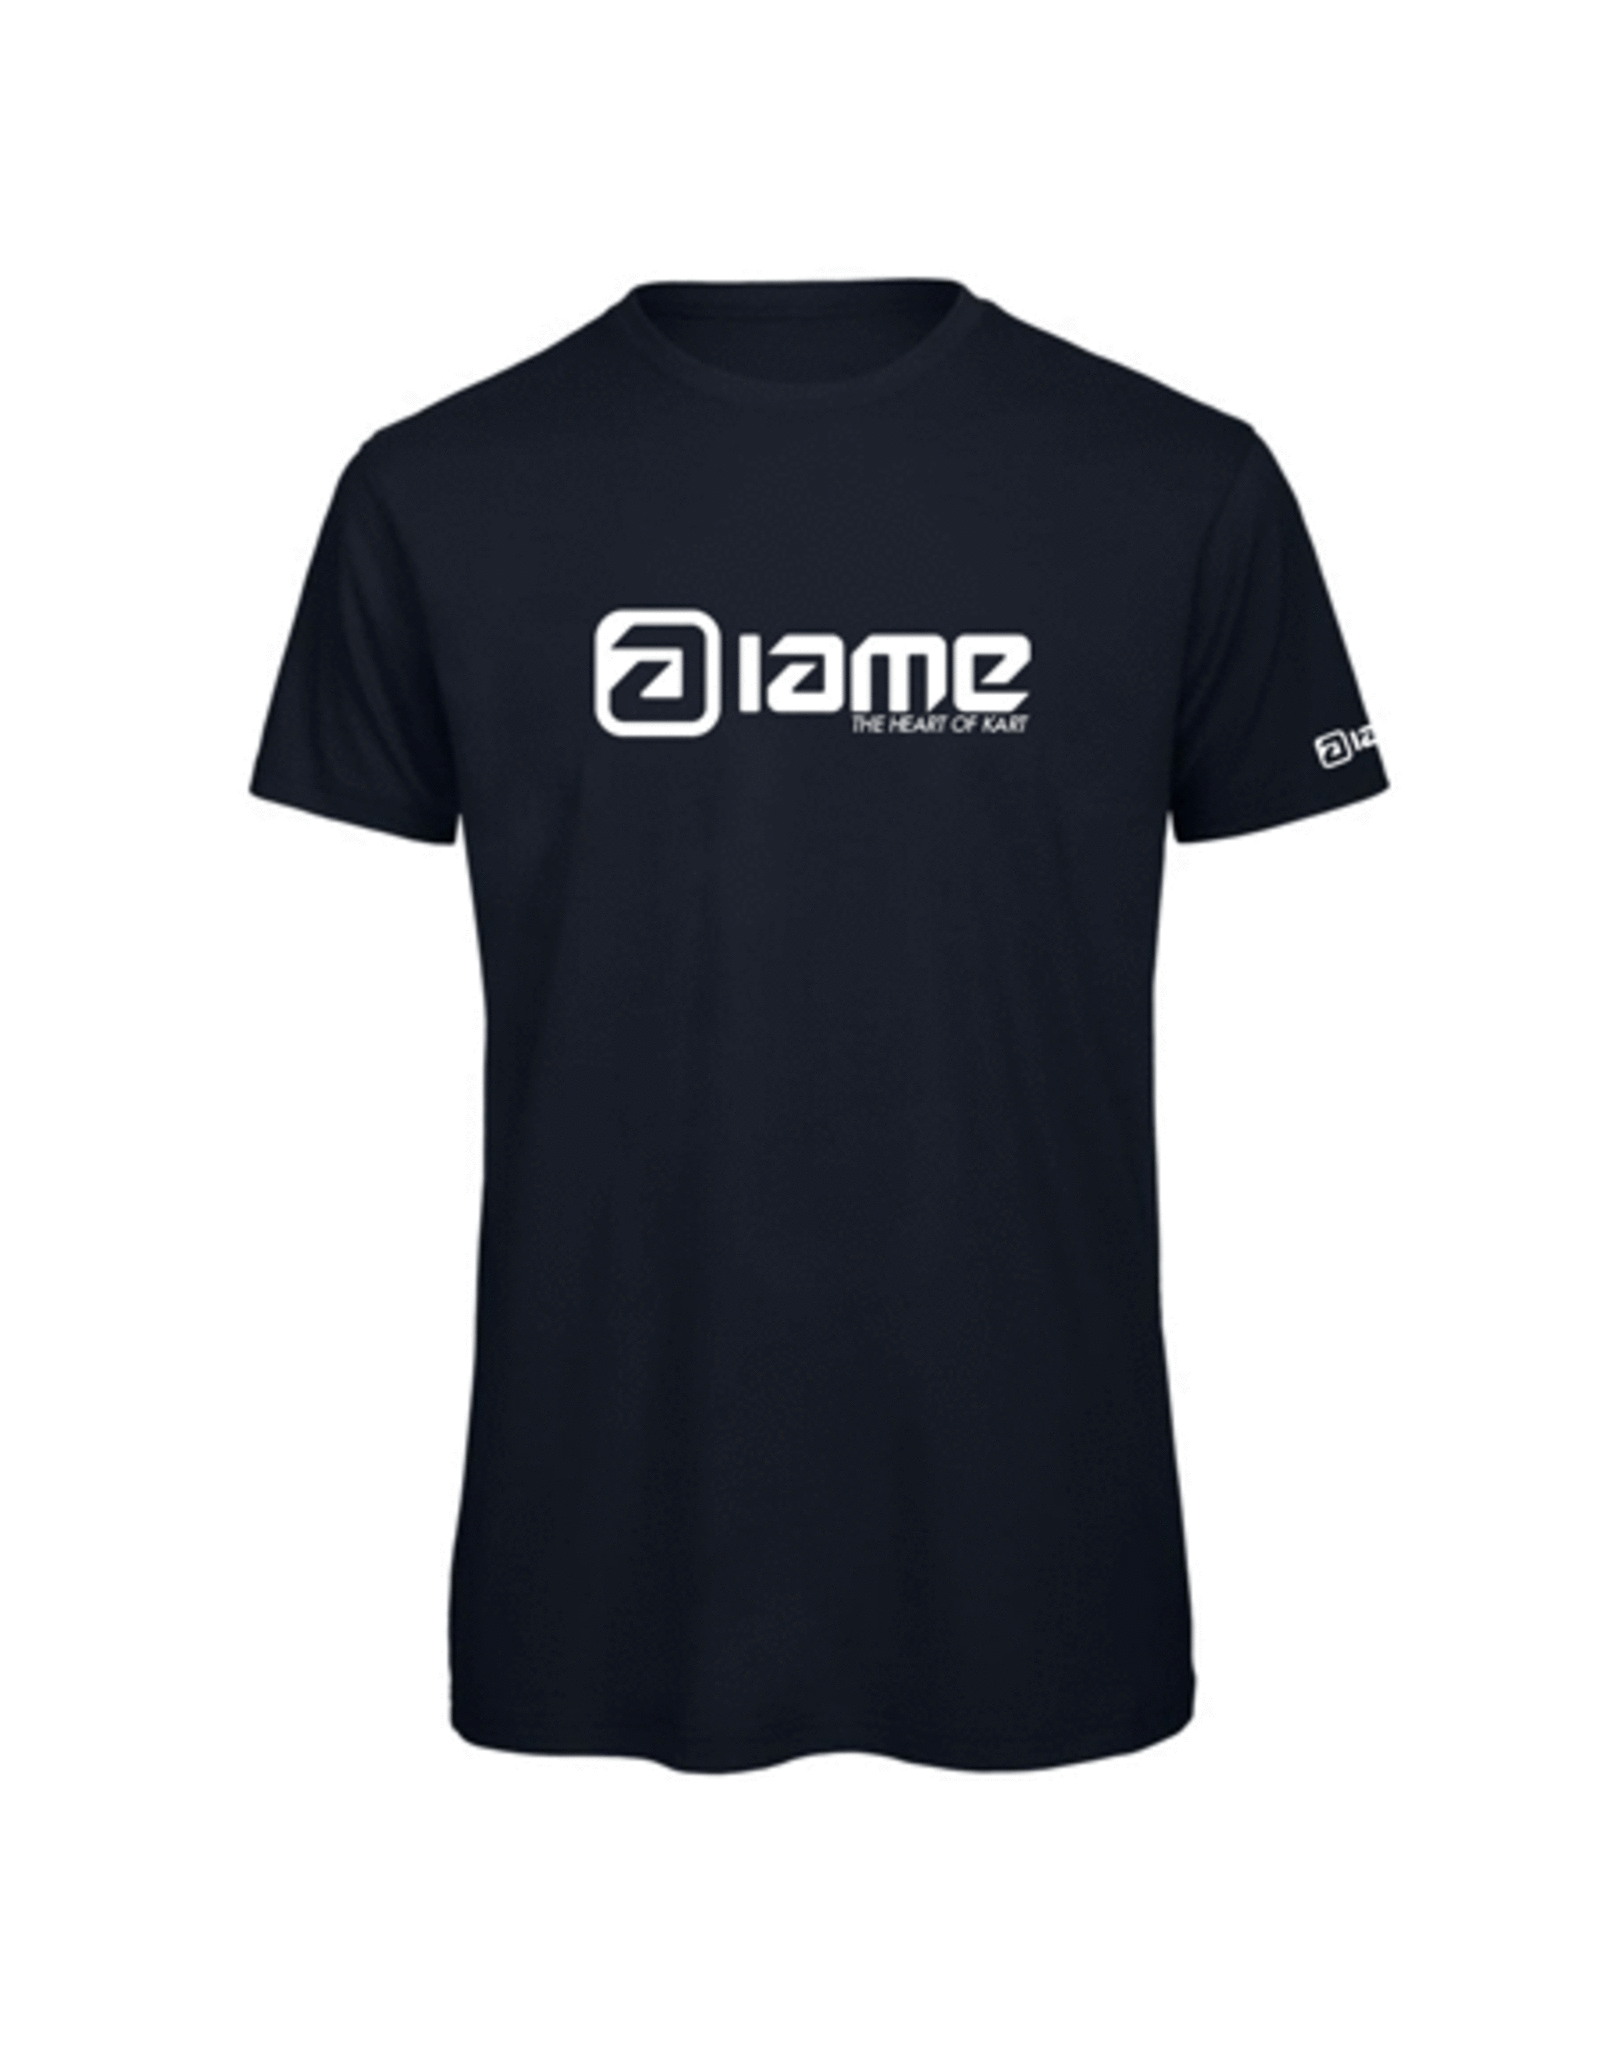 Iame T-shirt